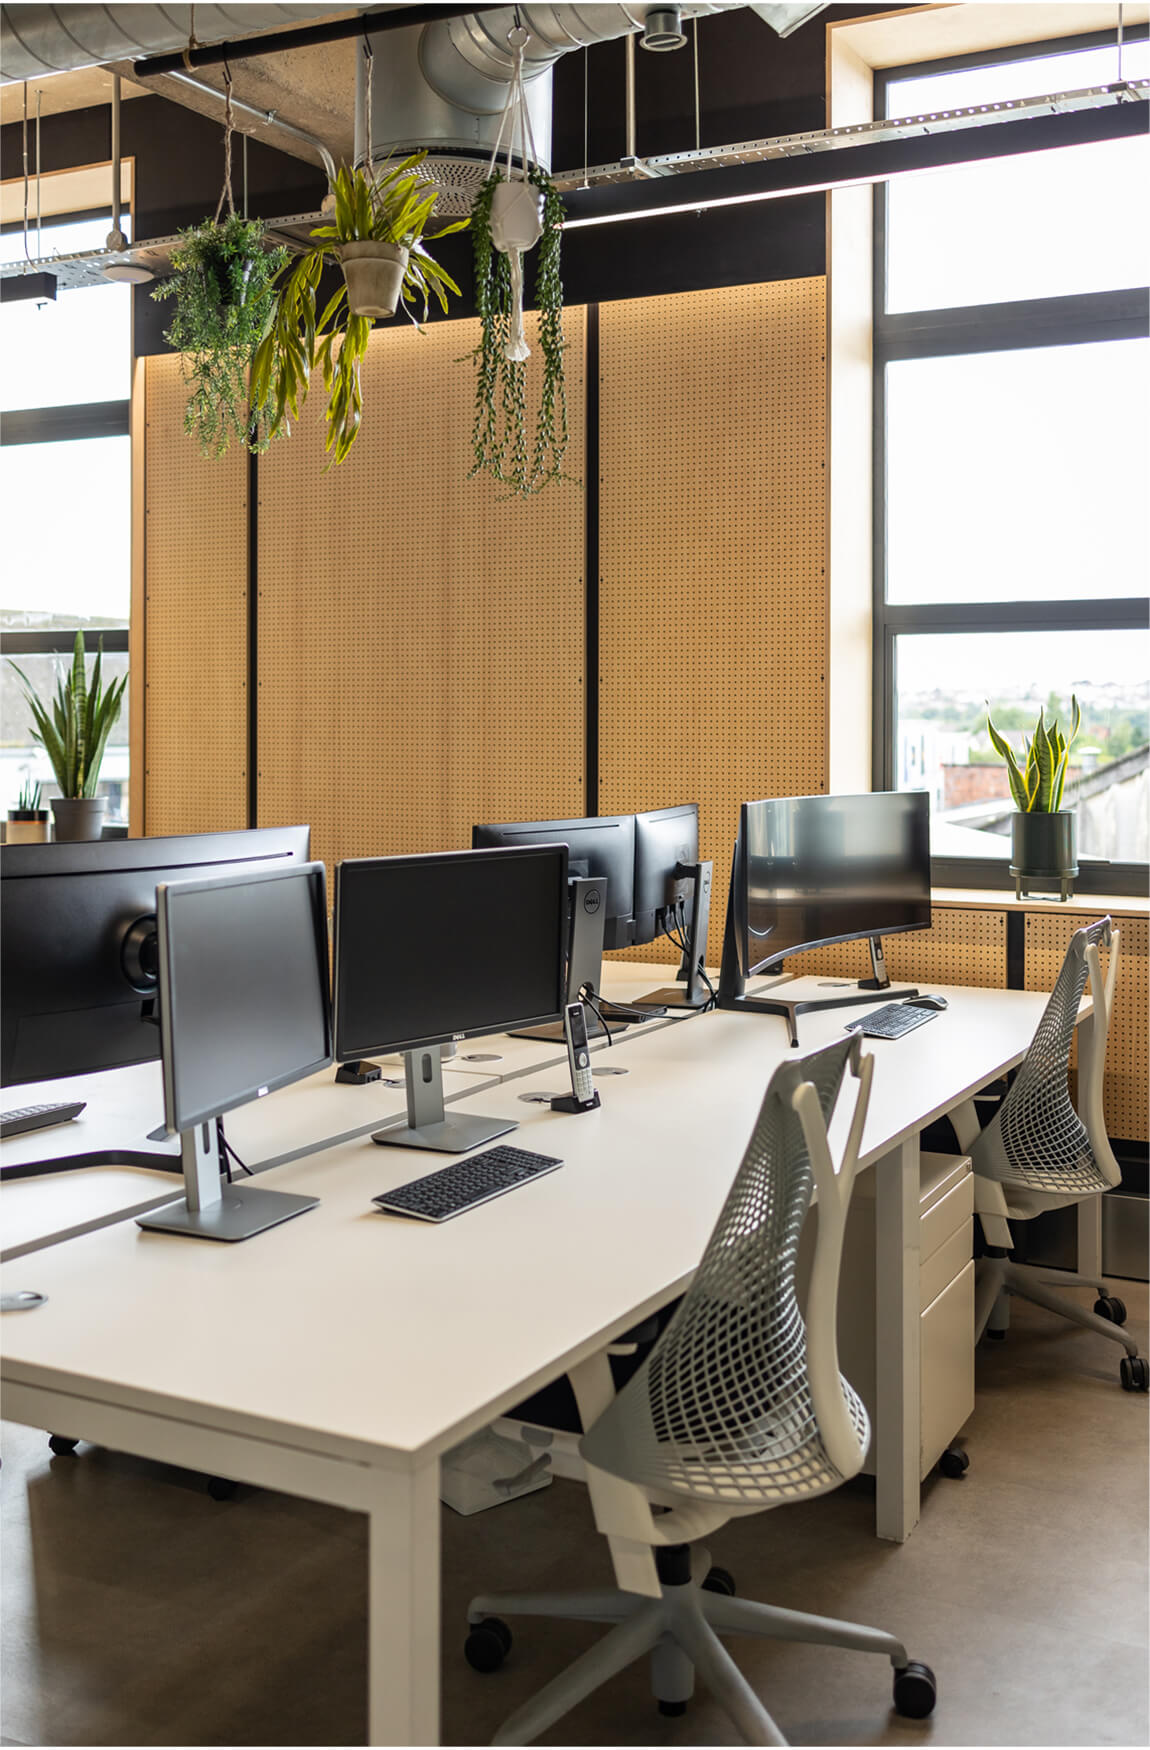 task-lighting-in-main-office-area